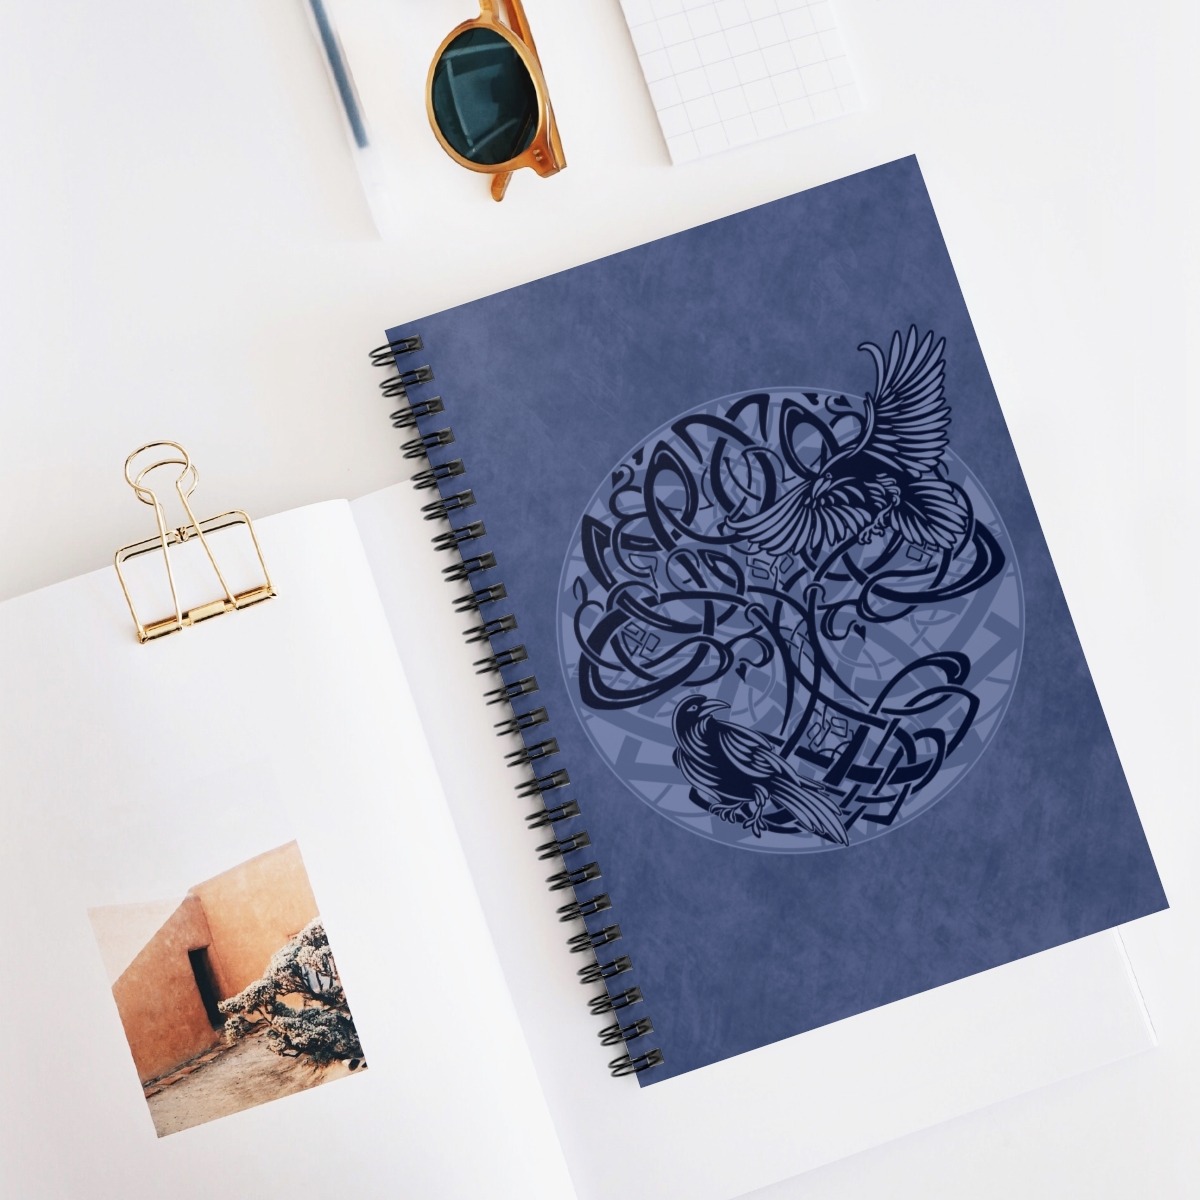 Blue Yggdrasil Ravens Spiral Notebook